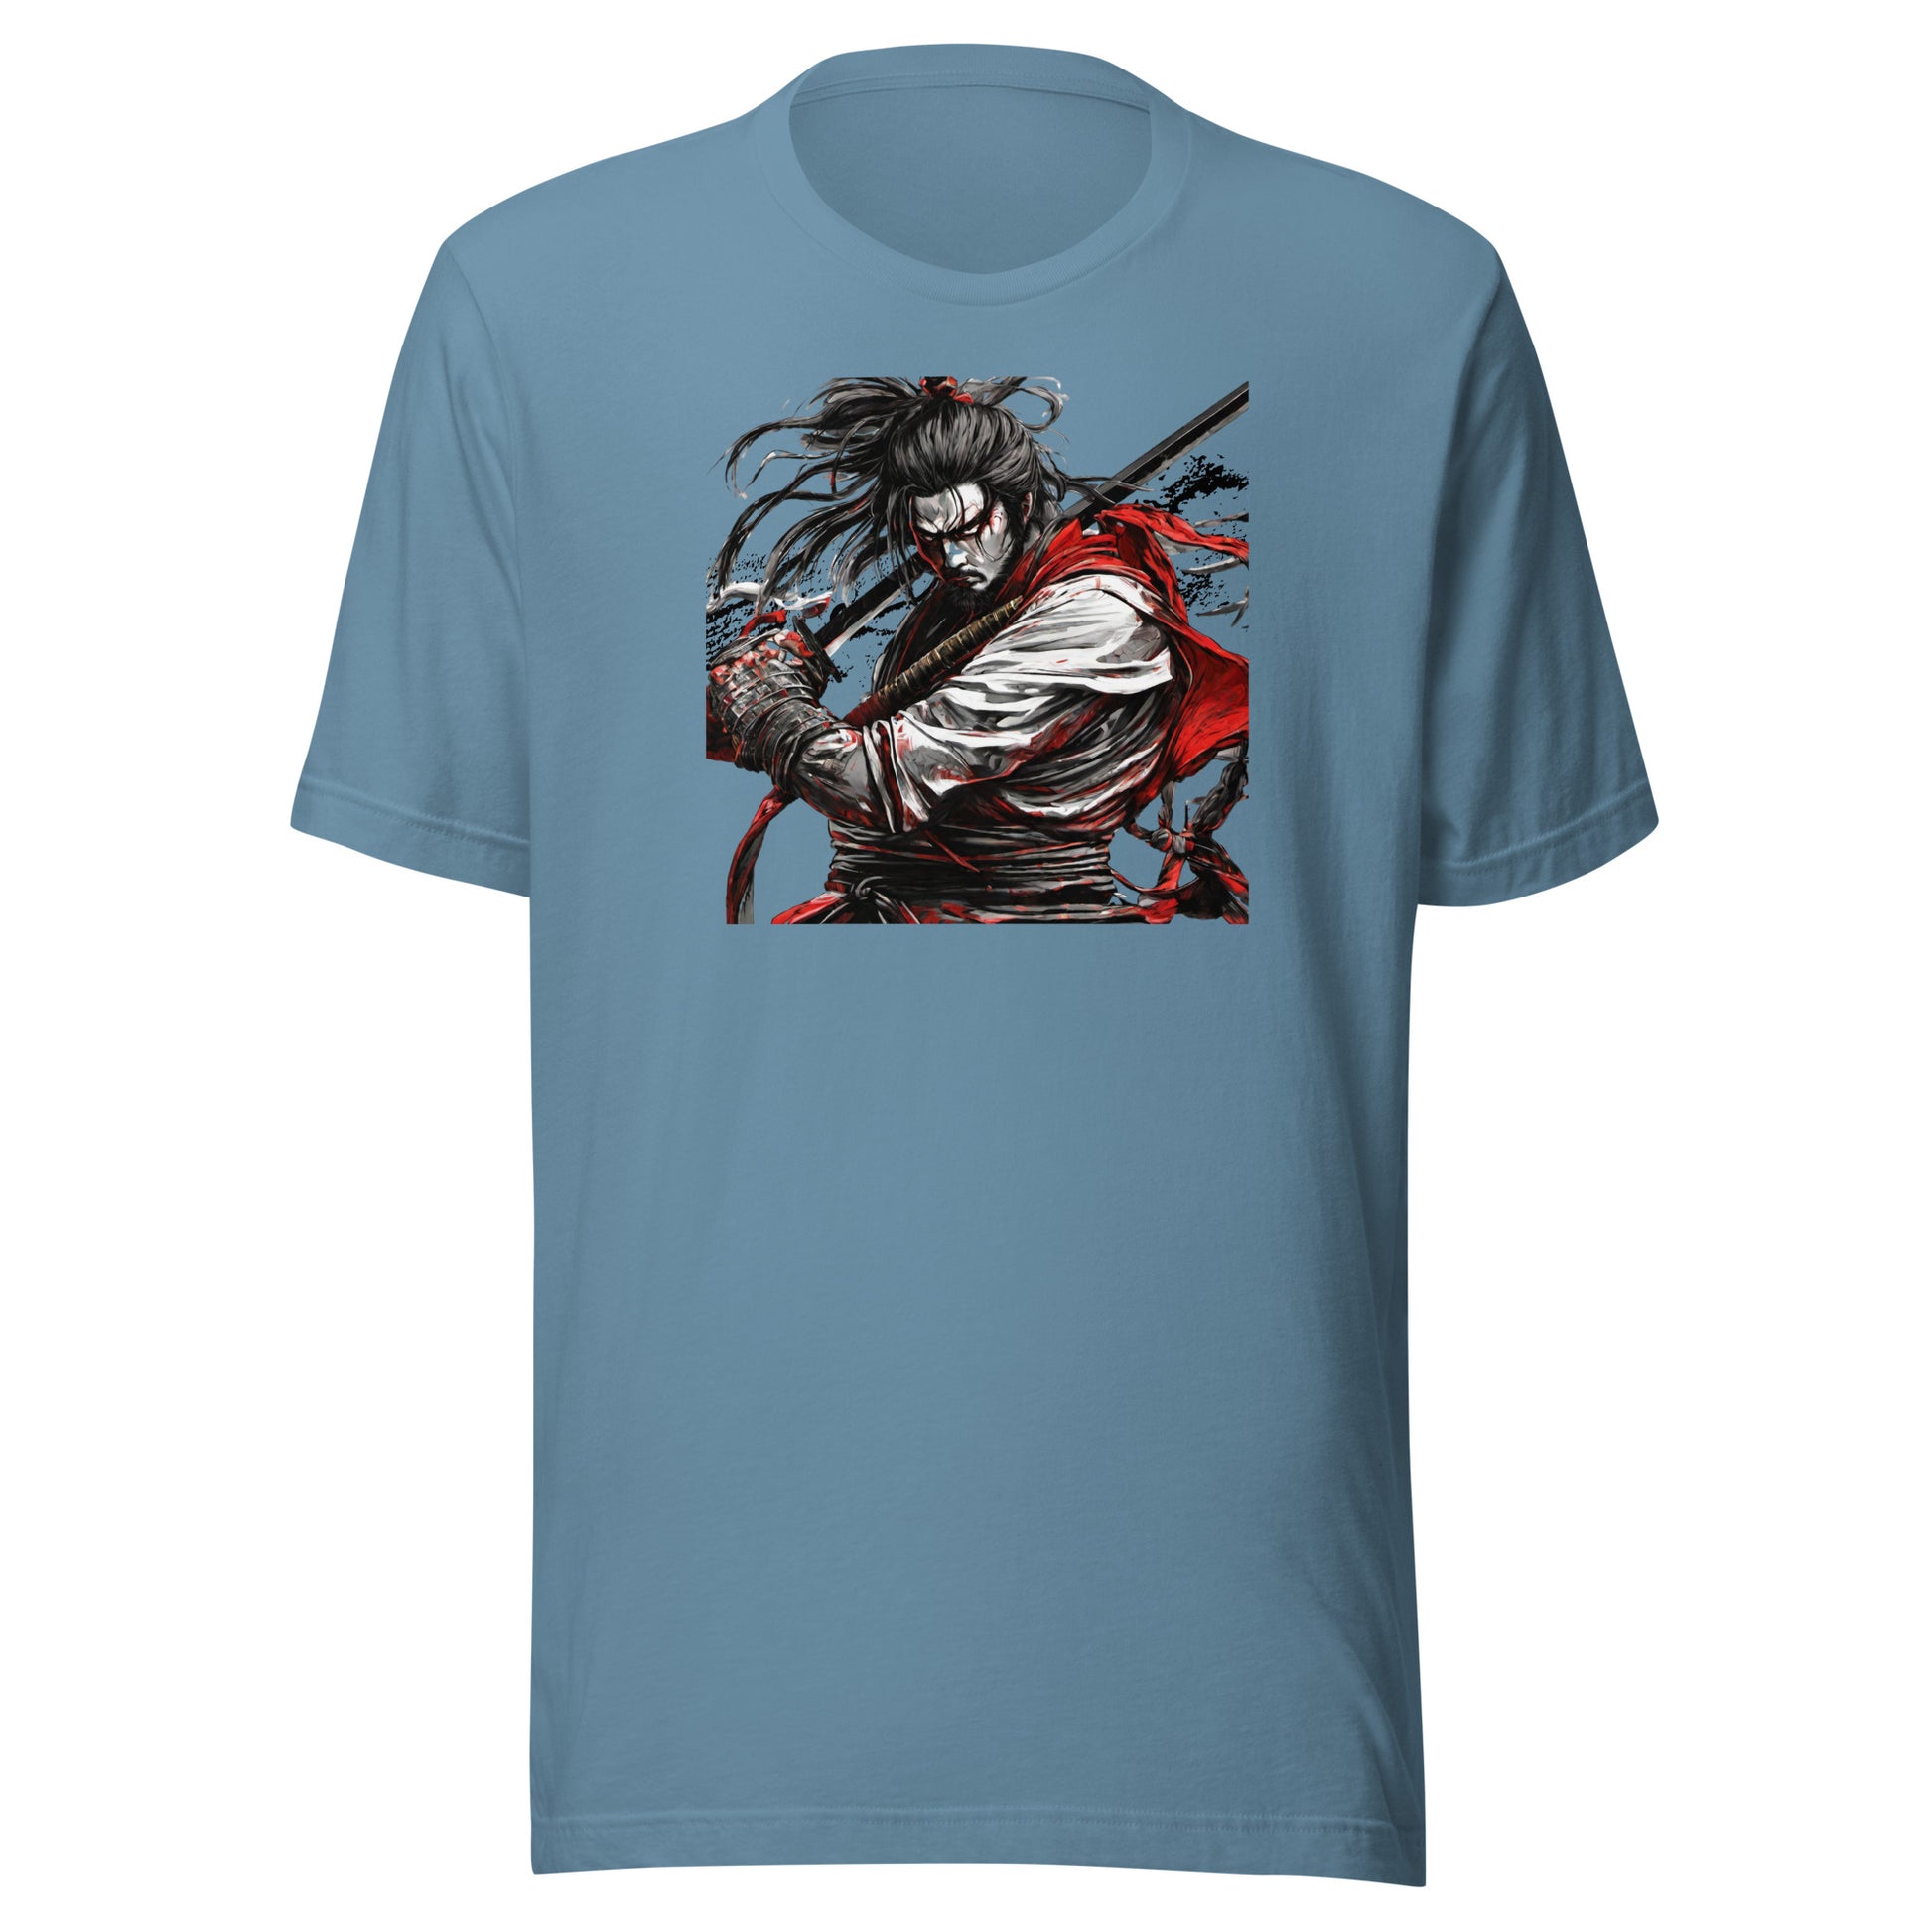 Graceful Warrior Men's Graphic T-Shirt Steel Blue